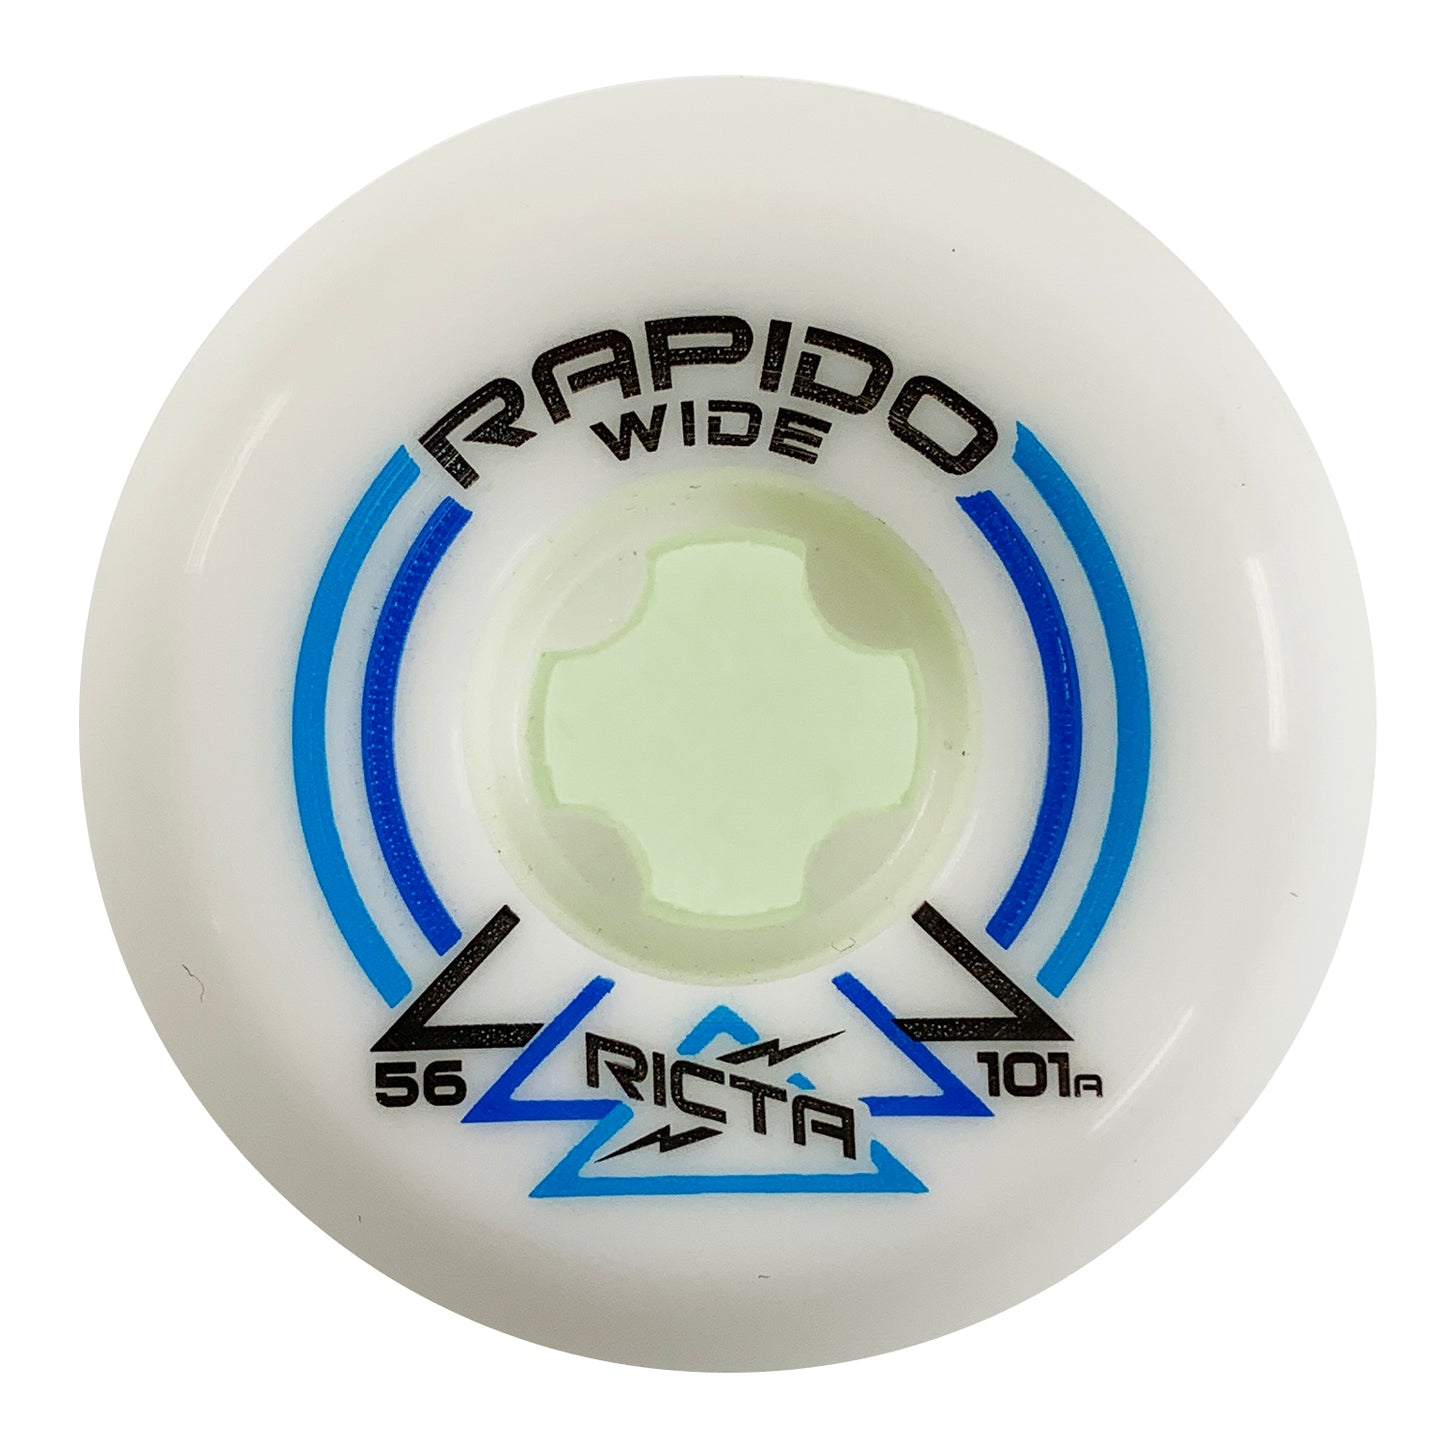 Ricta - 56mm - Rapido Wide 101a Wheels - White - Prime Delux Store